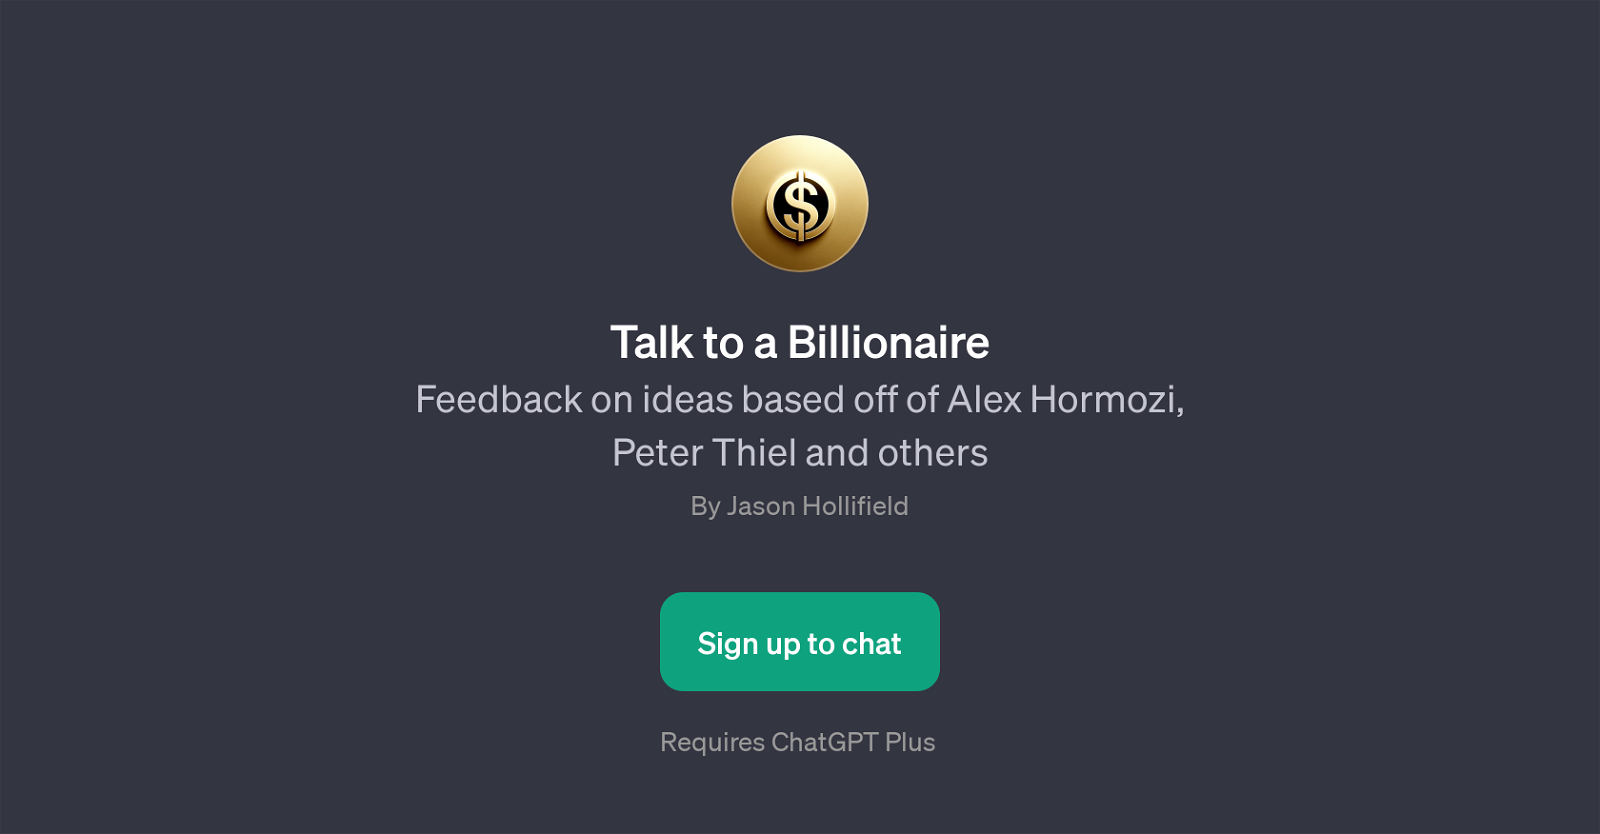 Talk to a Billionaire website